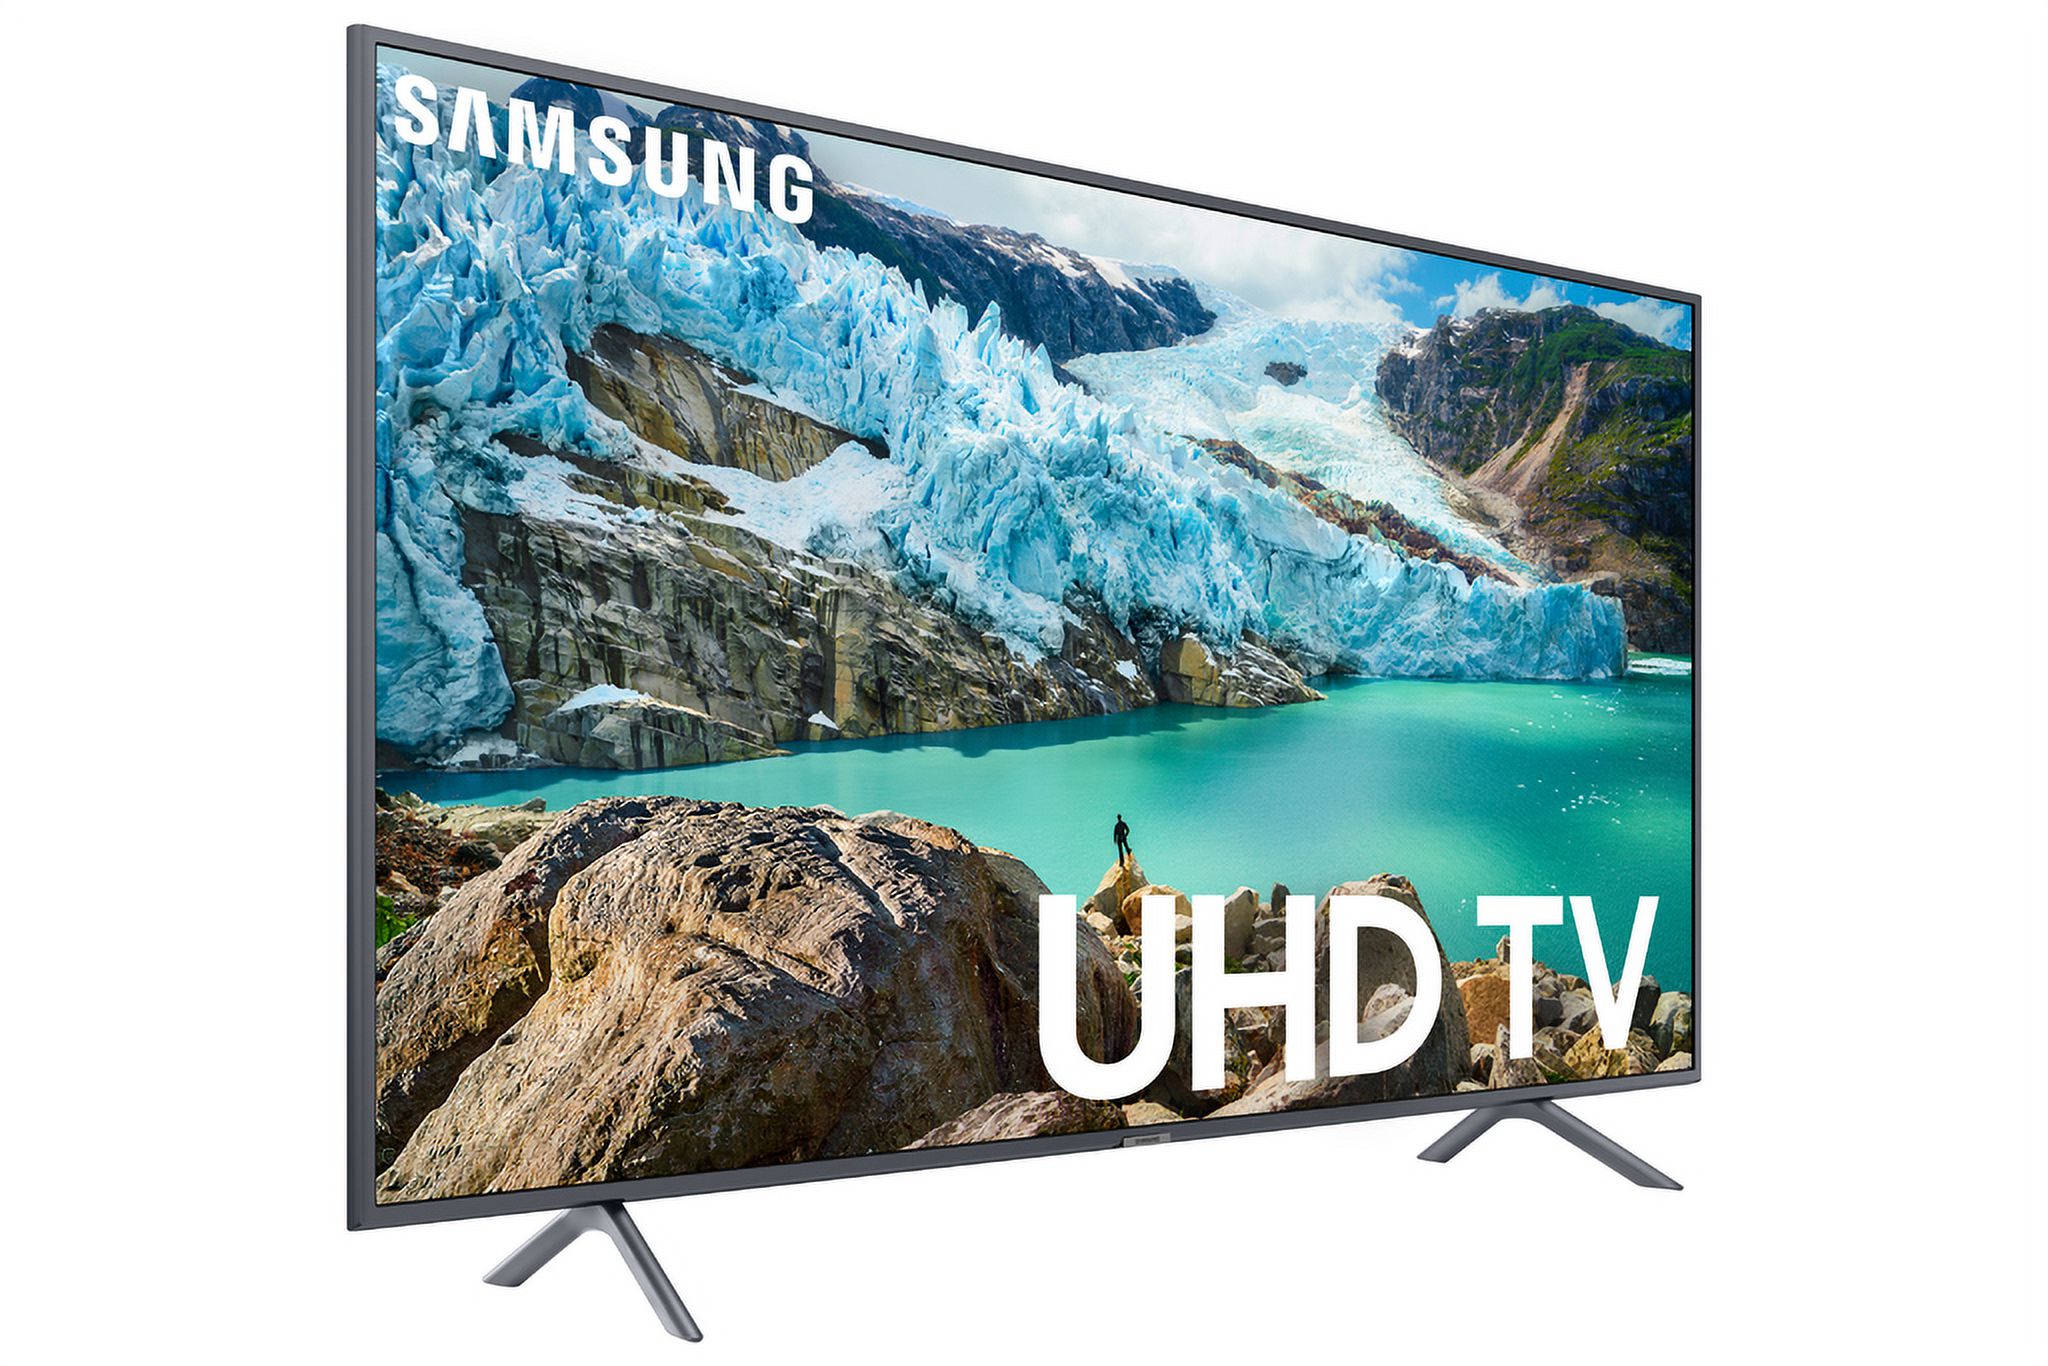 SAMSUNG 75" Class 4K Ultra HD (2160P) HDR Smart LED TV UN75RU7200 (2019 Model) - image 4 of 9